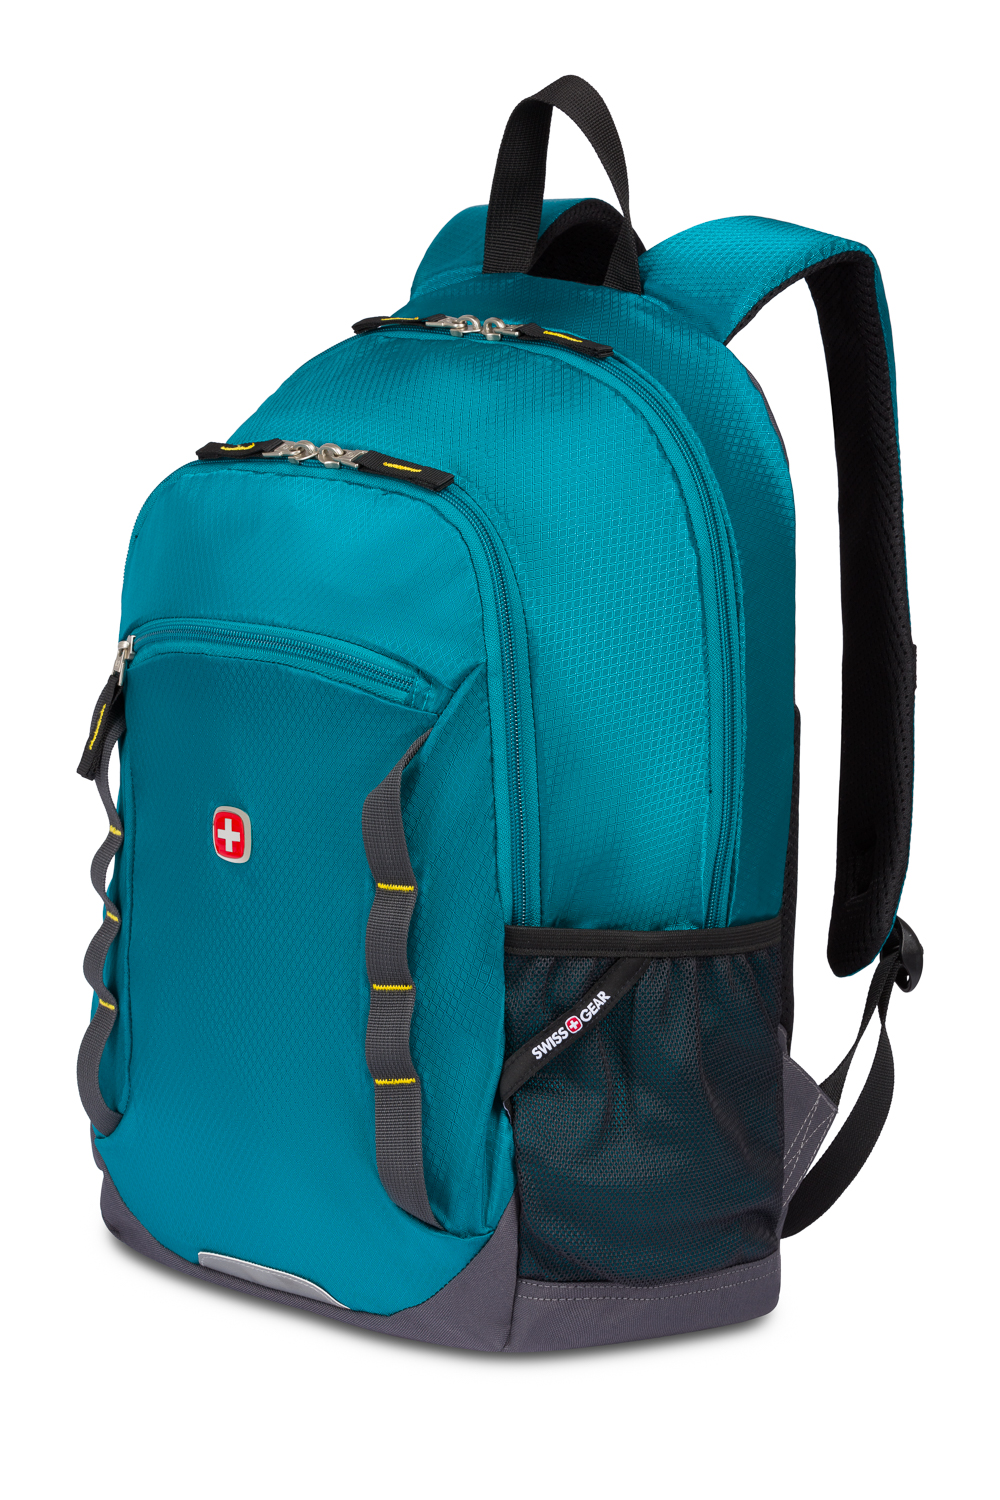 Swissgear 3795 Backpack - Turquoise